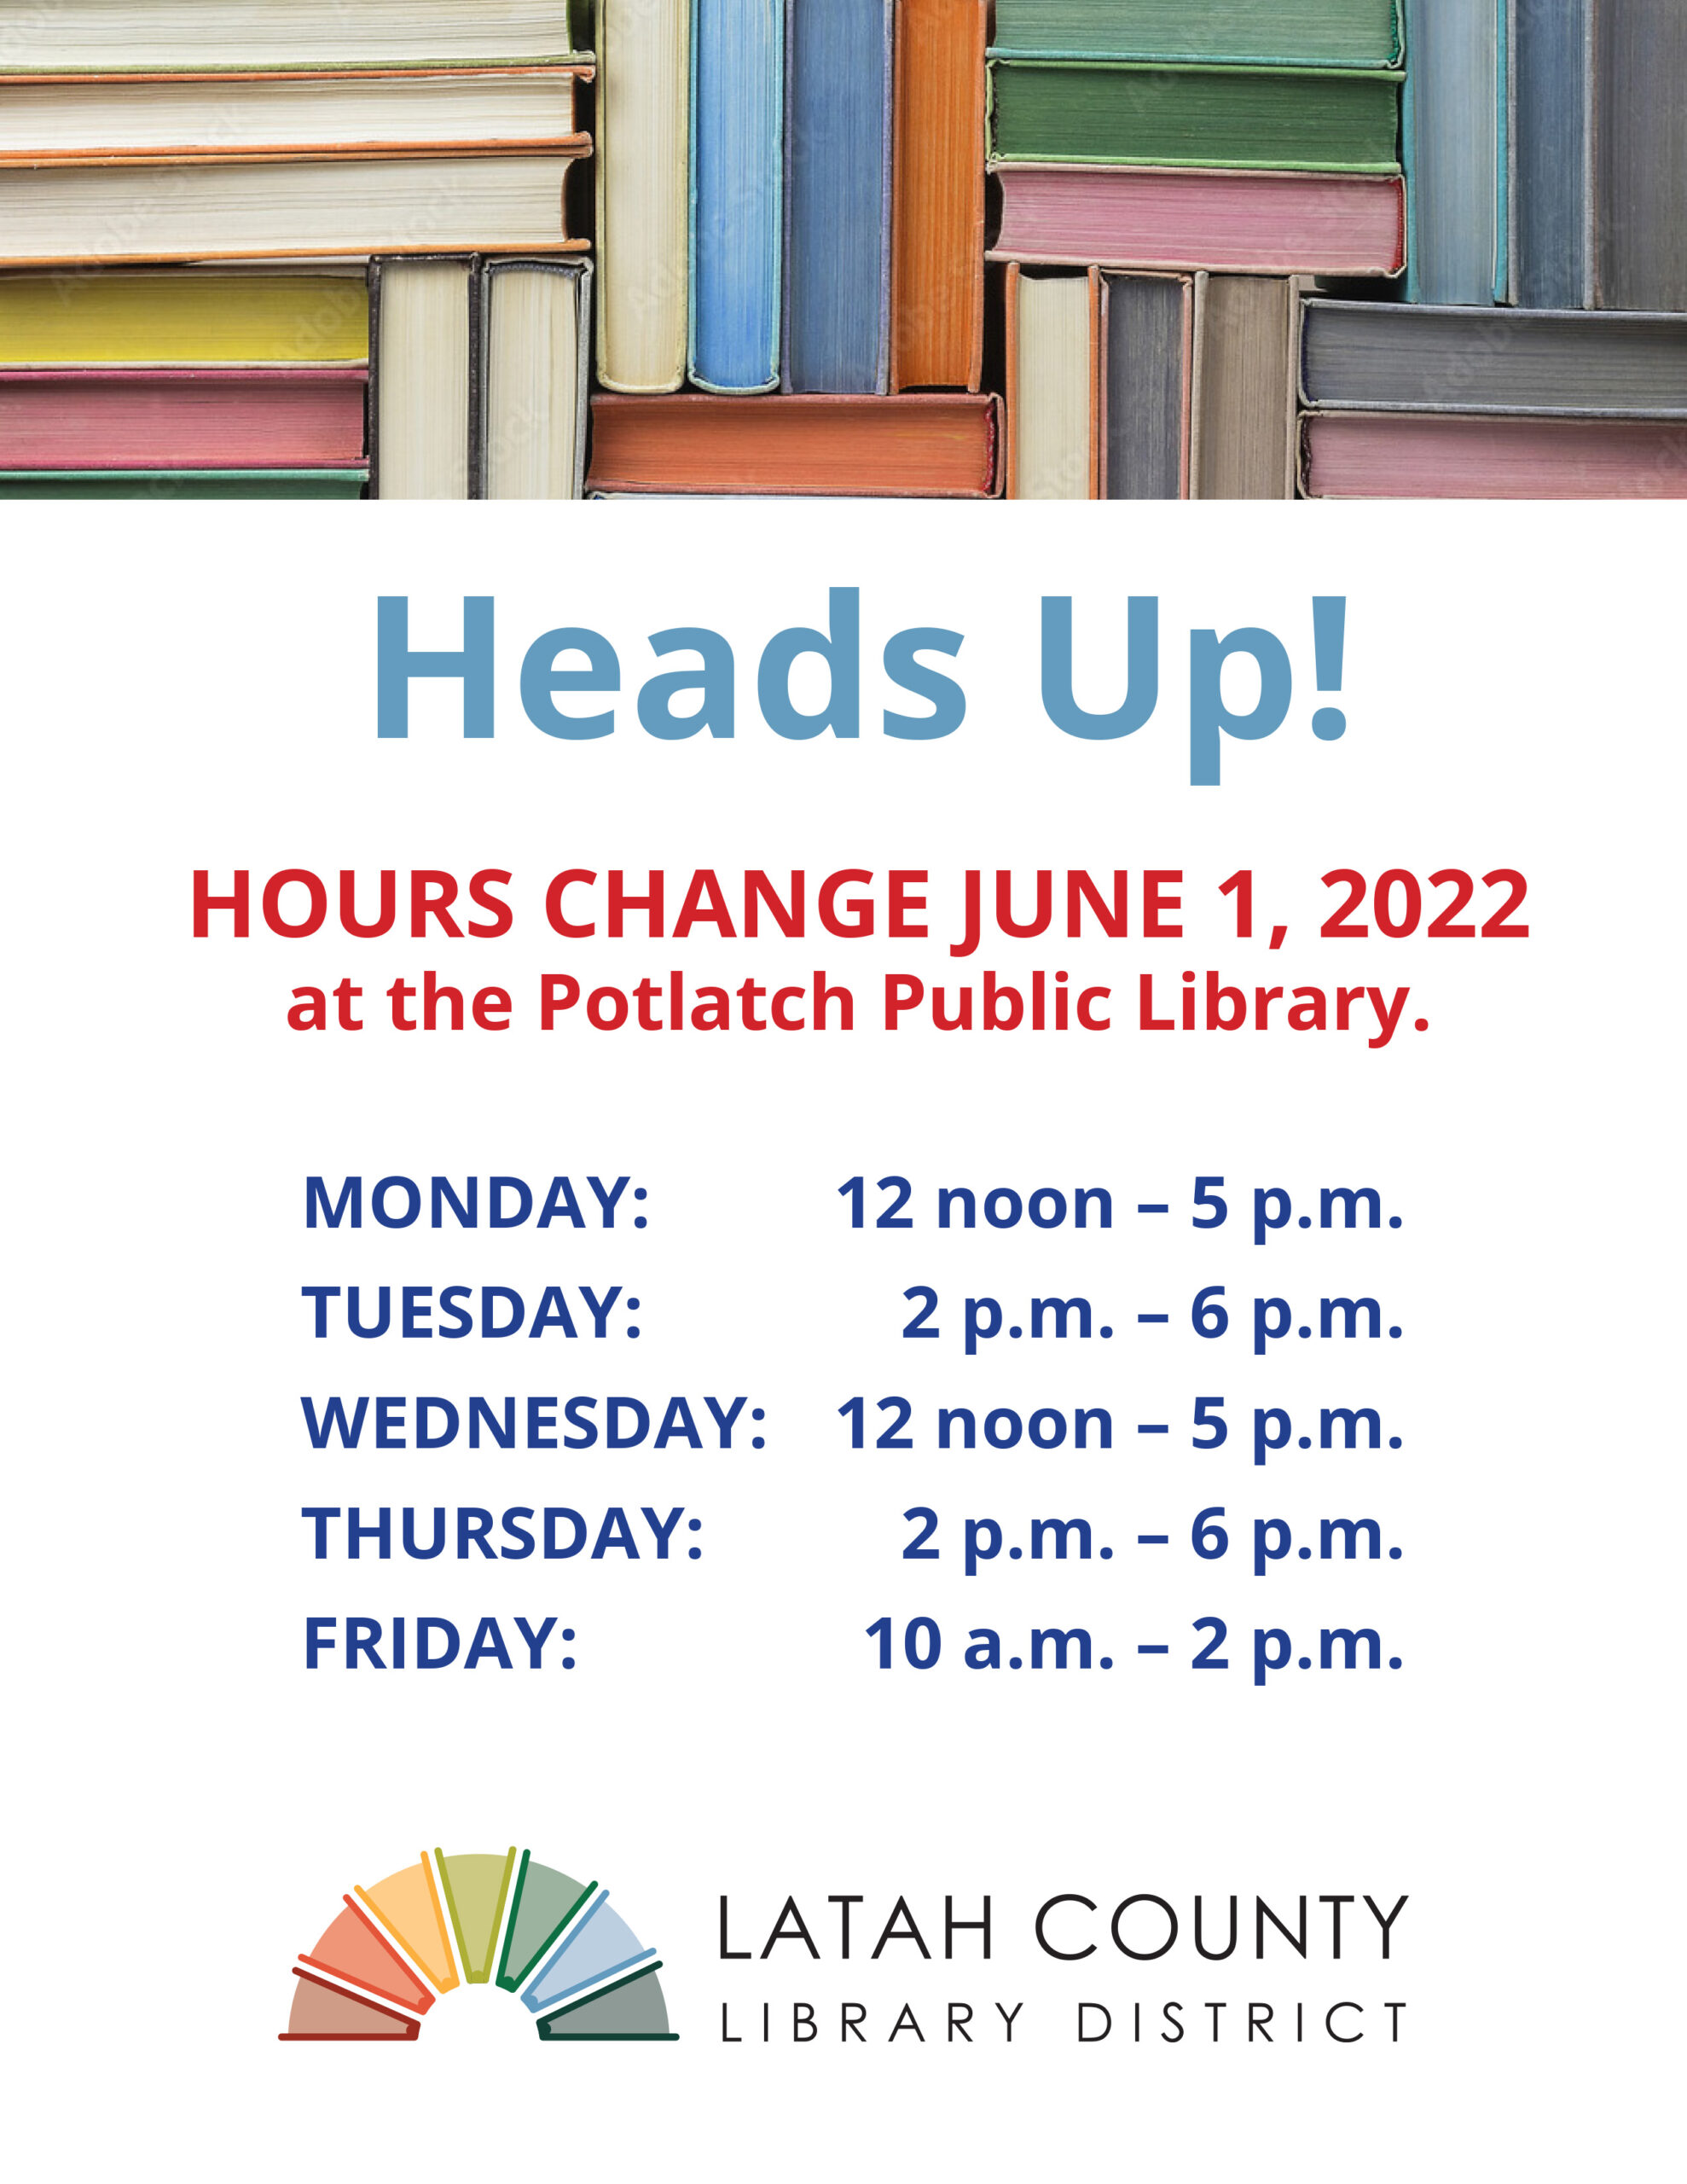 Hours Change June 1, 2022 – Potlatch Library_FLIER